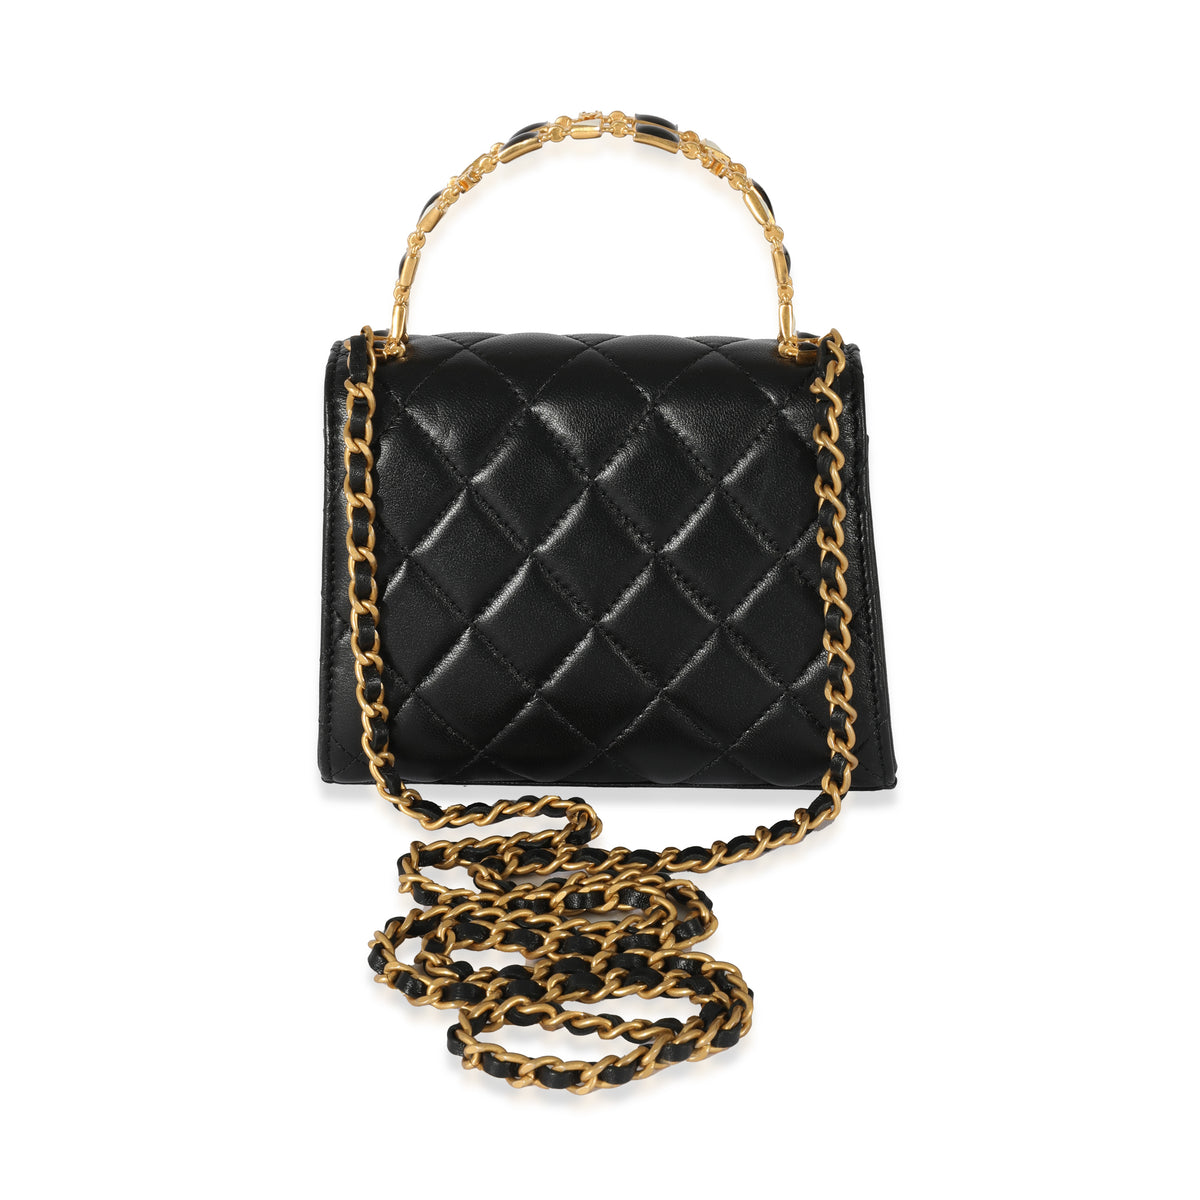 gold chanel clutch bag black